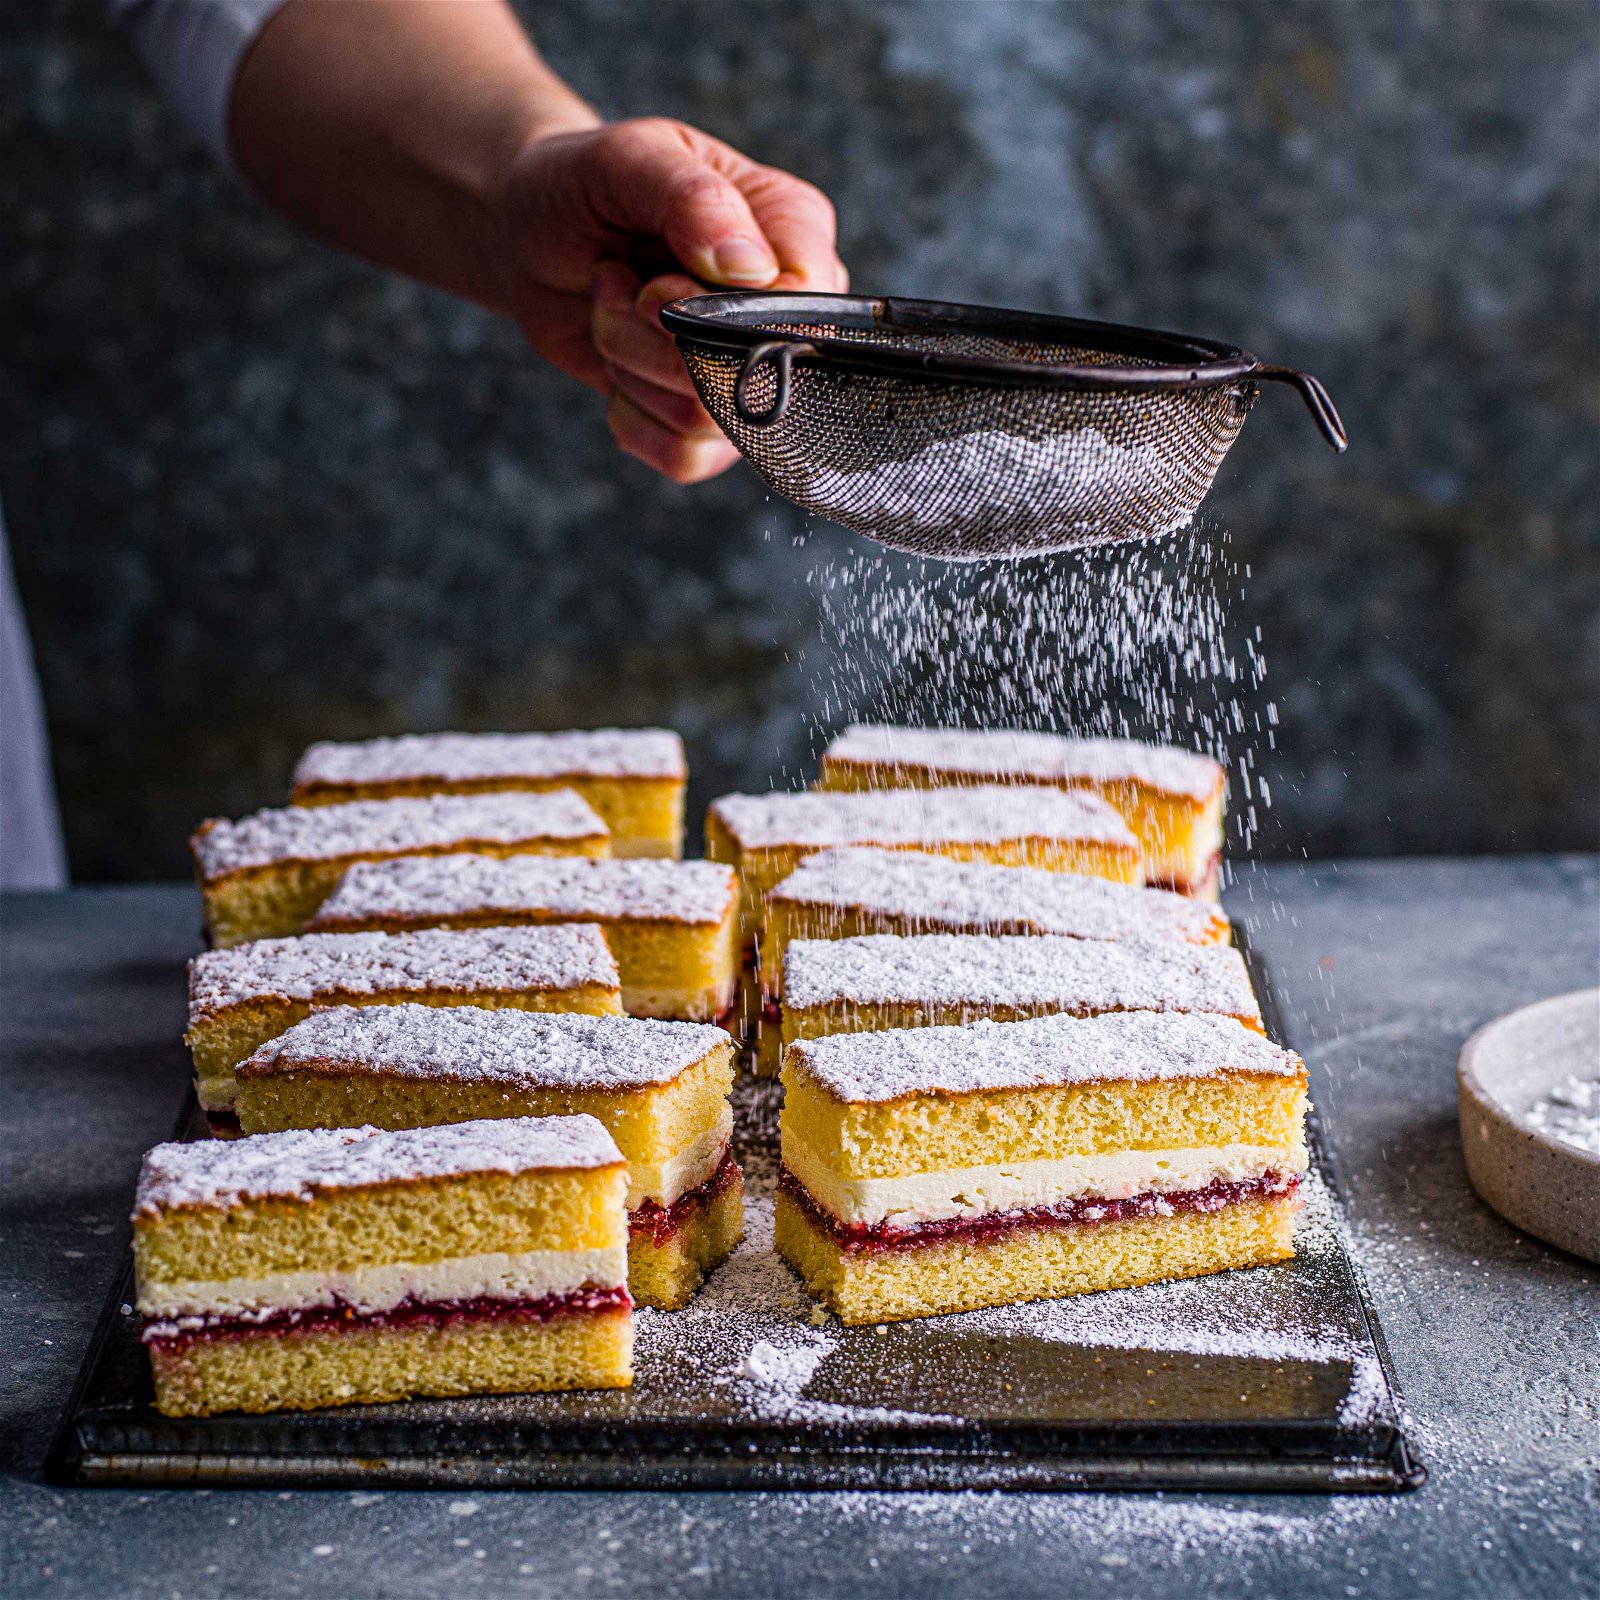 Fake Bakes Recipe - Tesco Victoria Sponge Cake